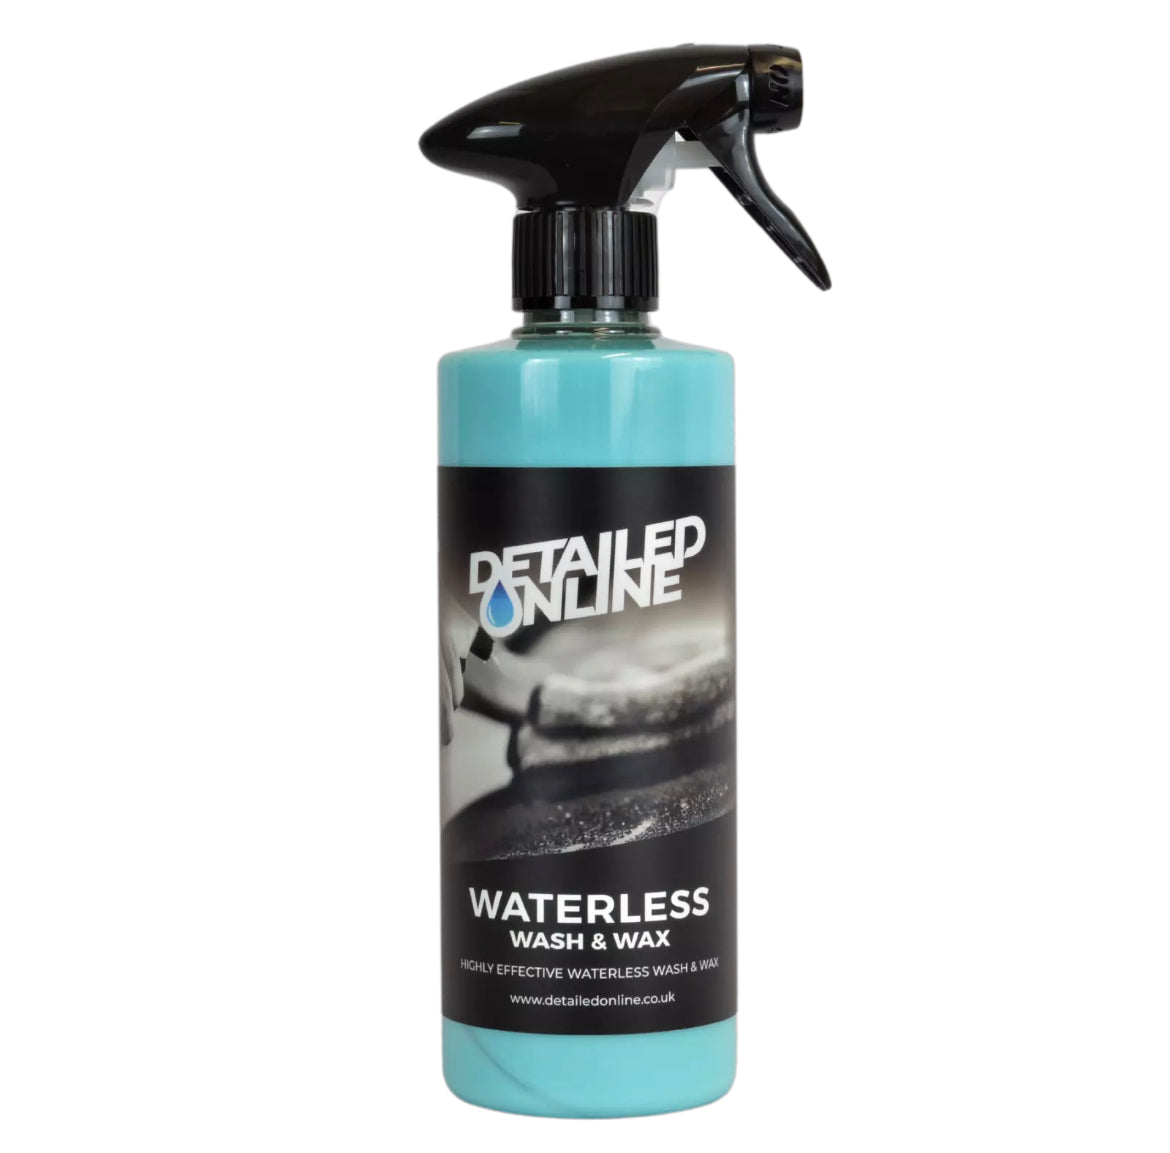 Waterless Wash and Wax (Versatile Waterless Cleaning)